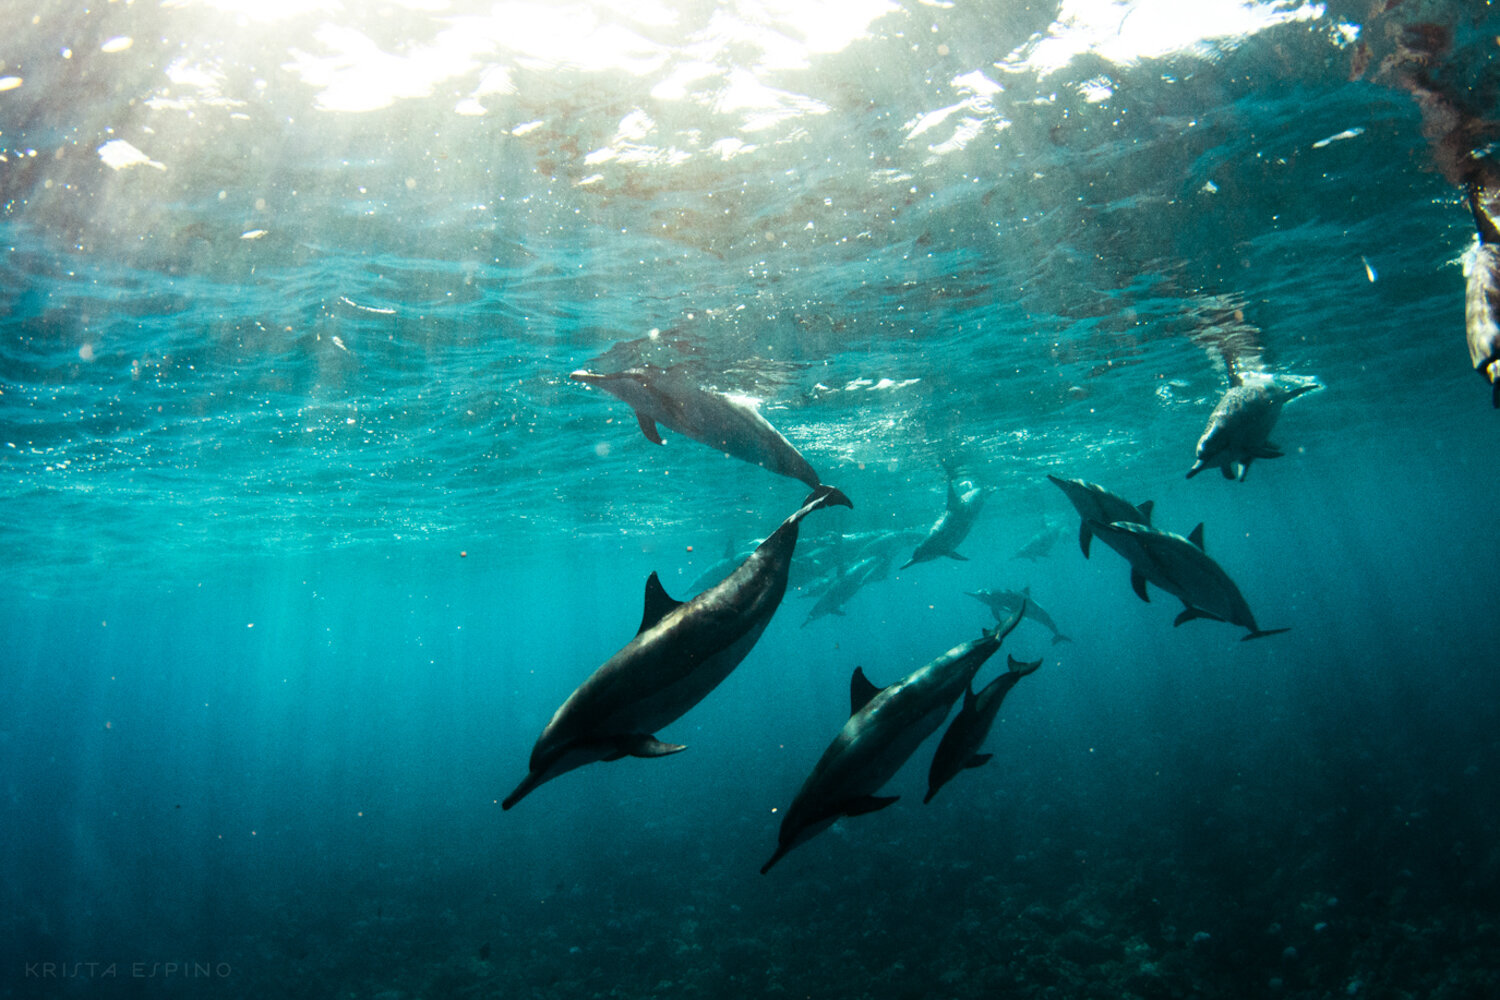 dolphin eco tour wild wildlife sealife lifestyle nature photography photographer krista espino travel underwater swim ocean big island hawaii kona dolphins_-16.jpg